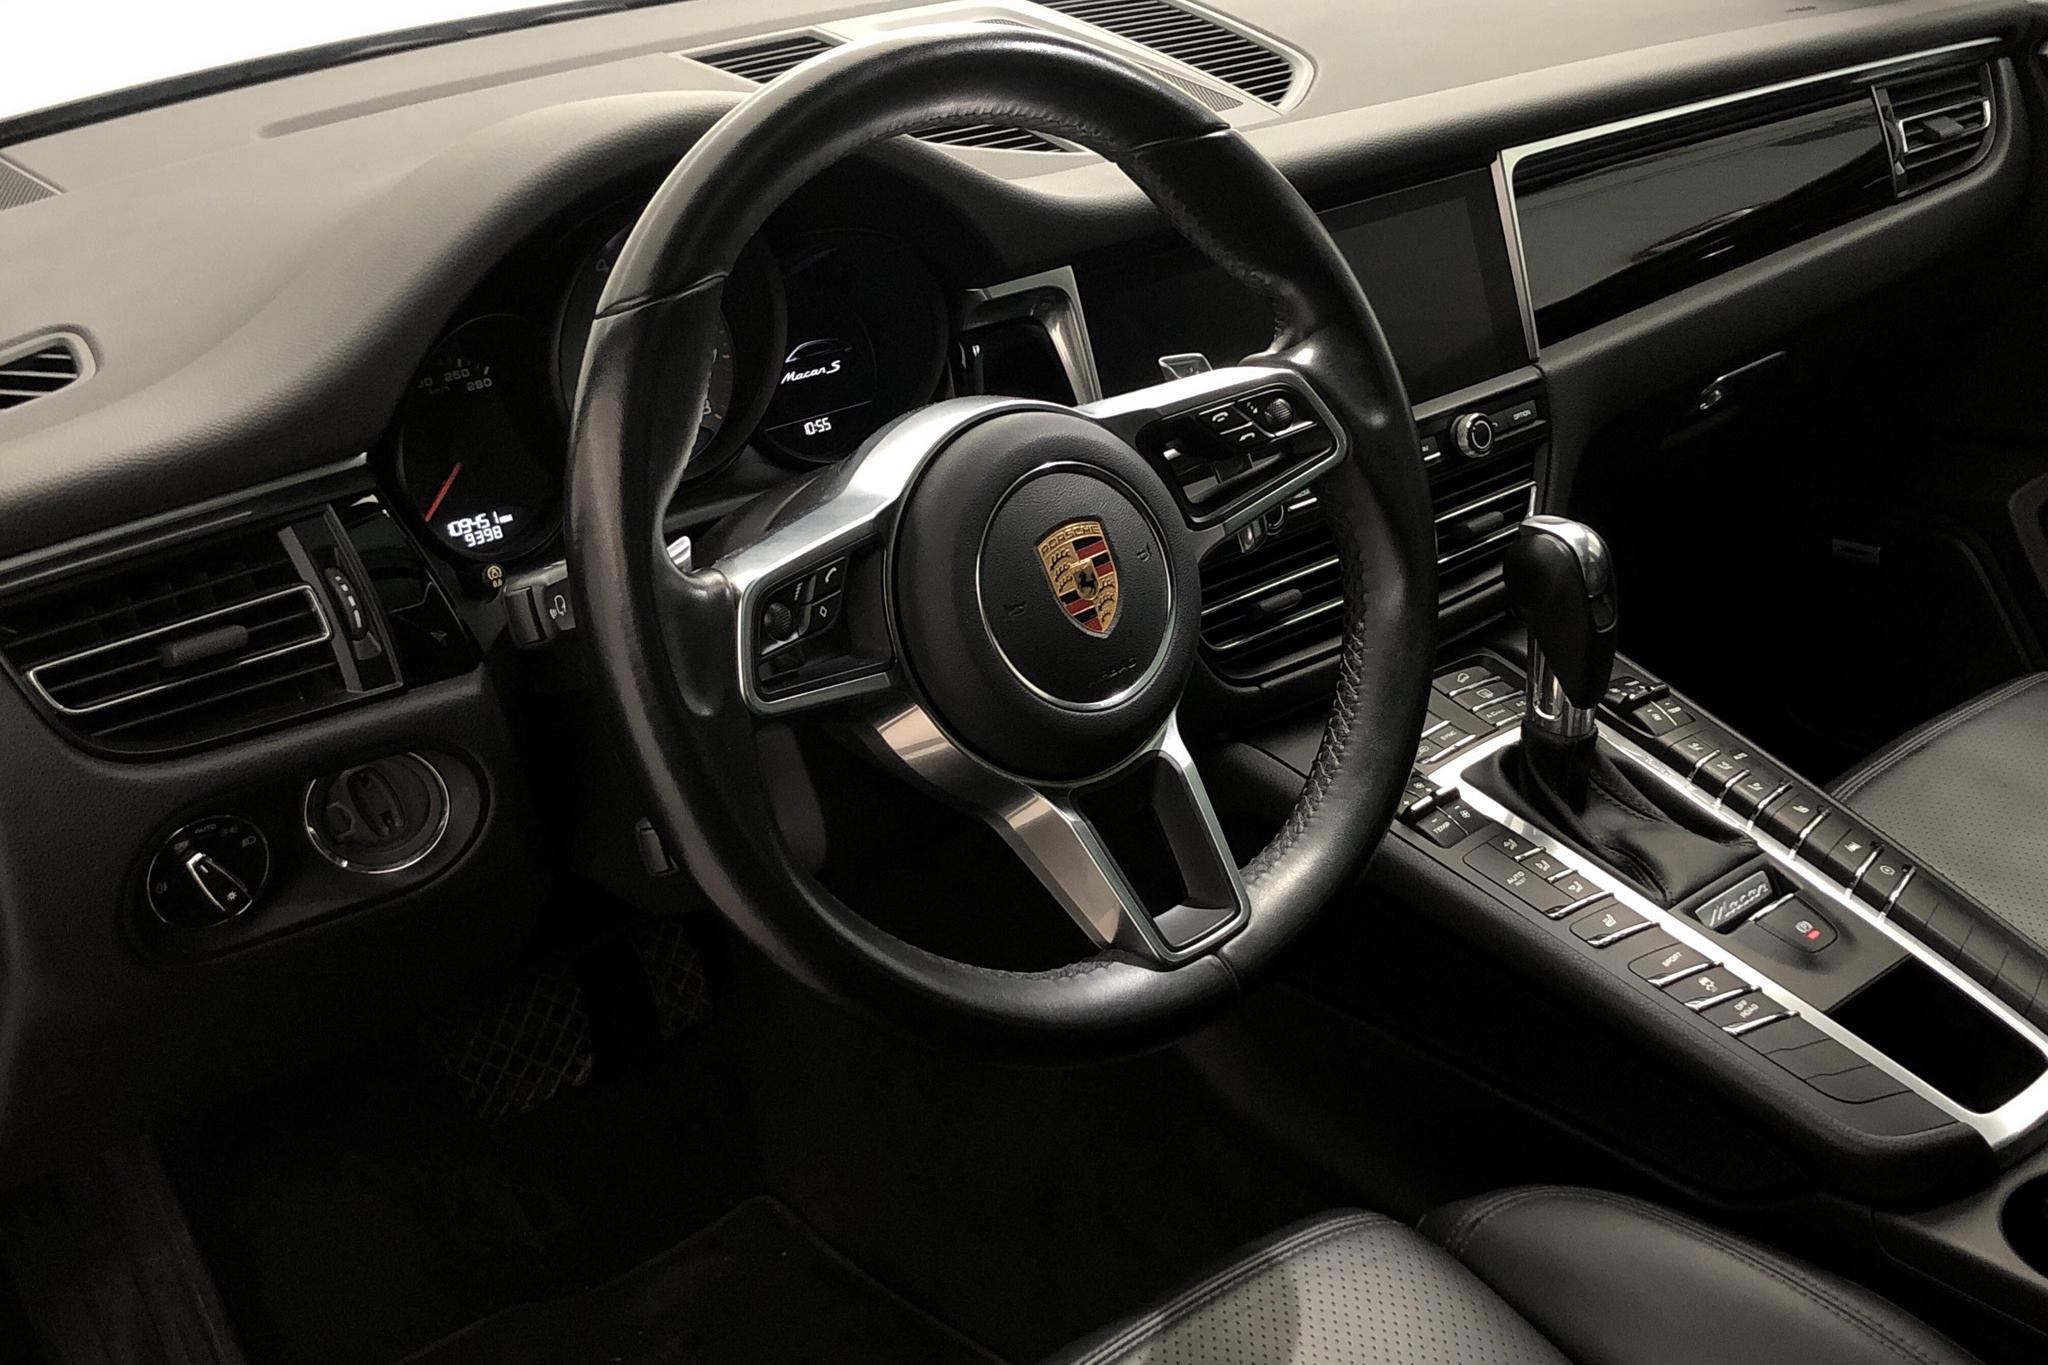 Porsche Macan S (354hk) - 109 460 km - Automatic - black - 2019